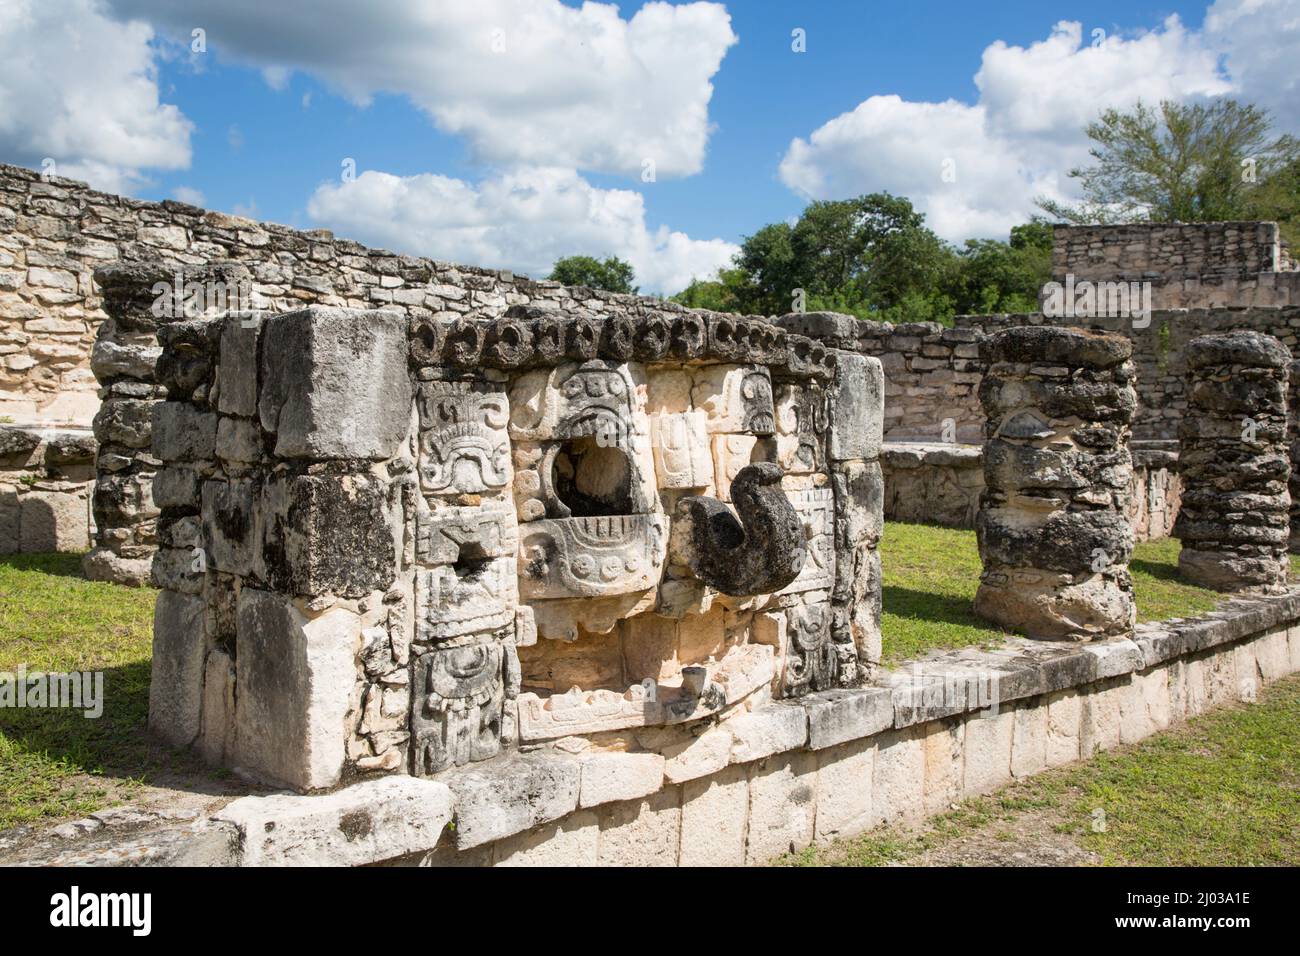 Stein-Chac-Maske, Maya-Ruinen, Mayapan Archäologische Zone, Bundesstaat Yucatan, Mexiko, Nordamerika Stockfoto